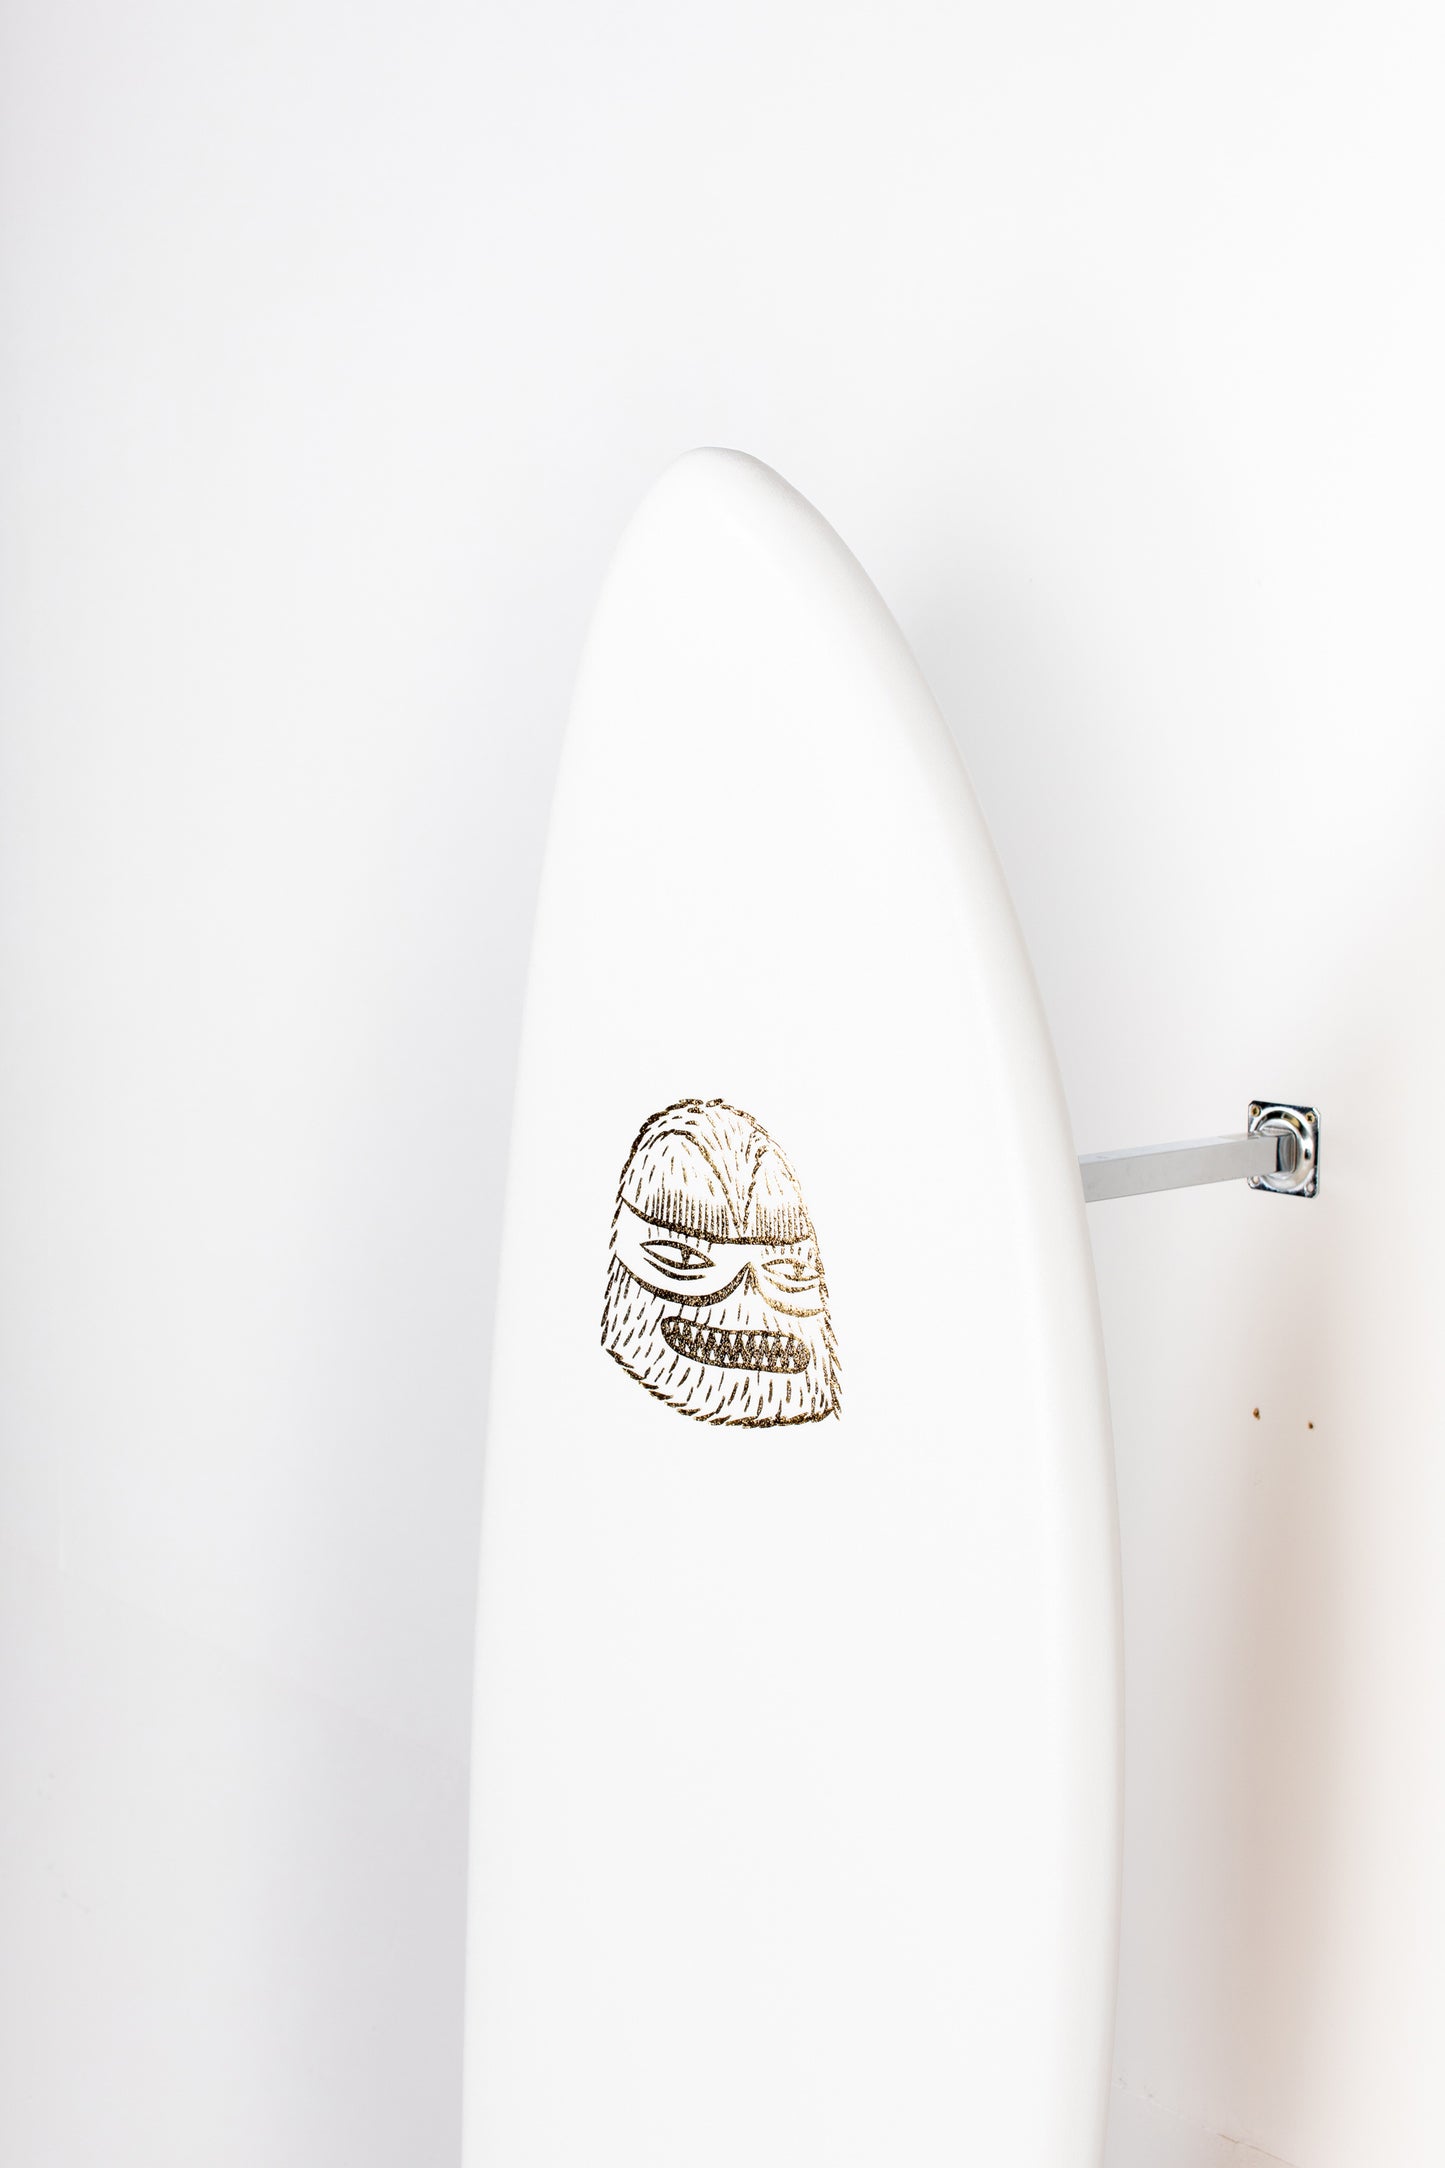 
                  
                    Pukas Surf Shop - Catch Surf - ODYSEA 60 SKIPPER THRUSTER x EVAN ROSSELL PRO - 6'0" x 21.5" x 3" x 48L.
                  
                